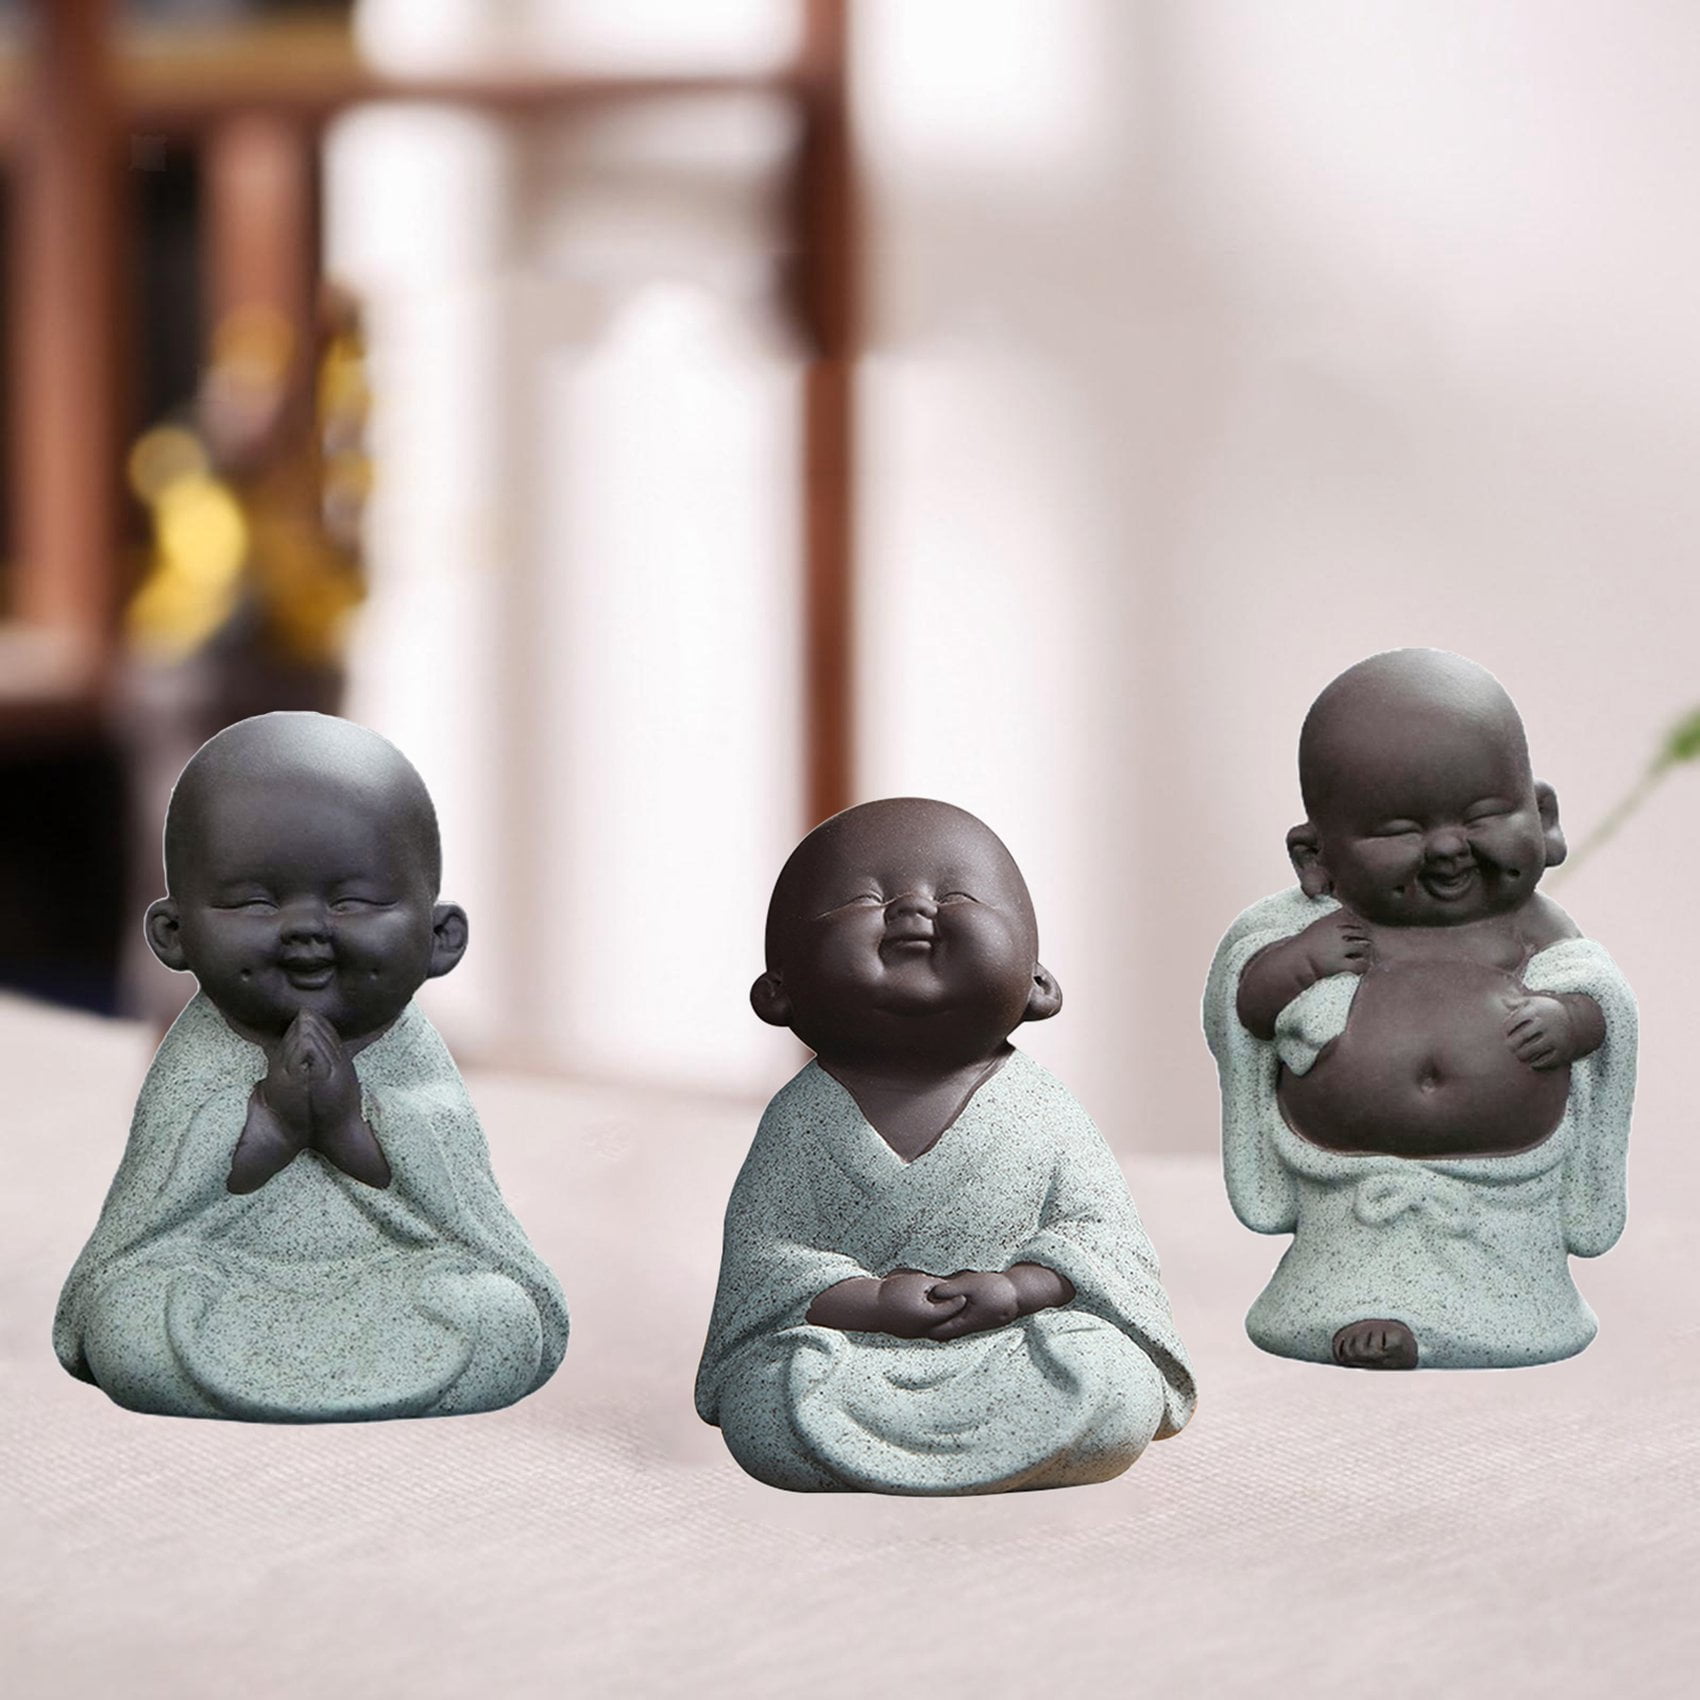 Crafts Little Buddha Creative Ceramic Dolls Figurine Cute Decor C Buddha Baby Home Ornaments Baby Statue Figurines